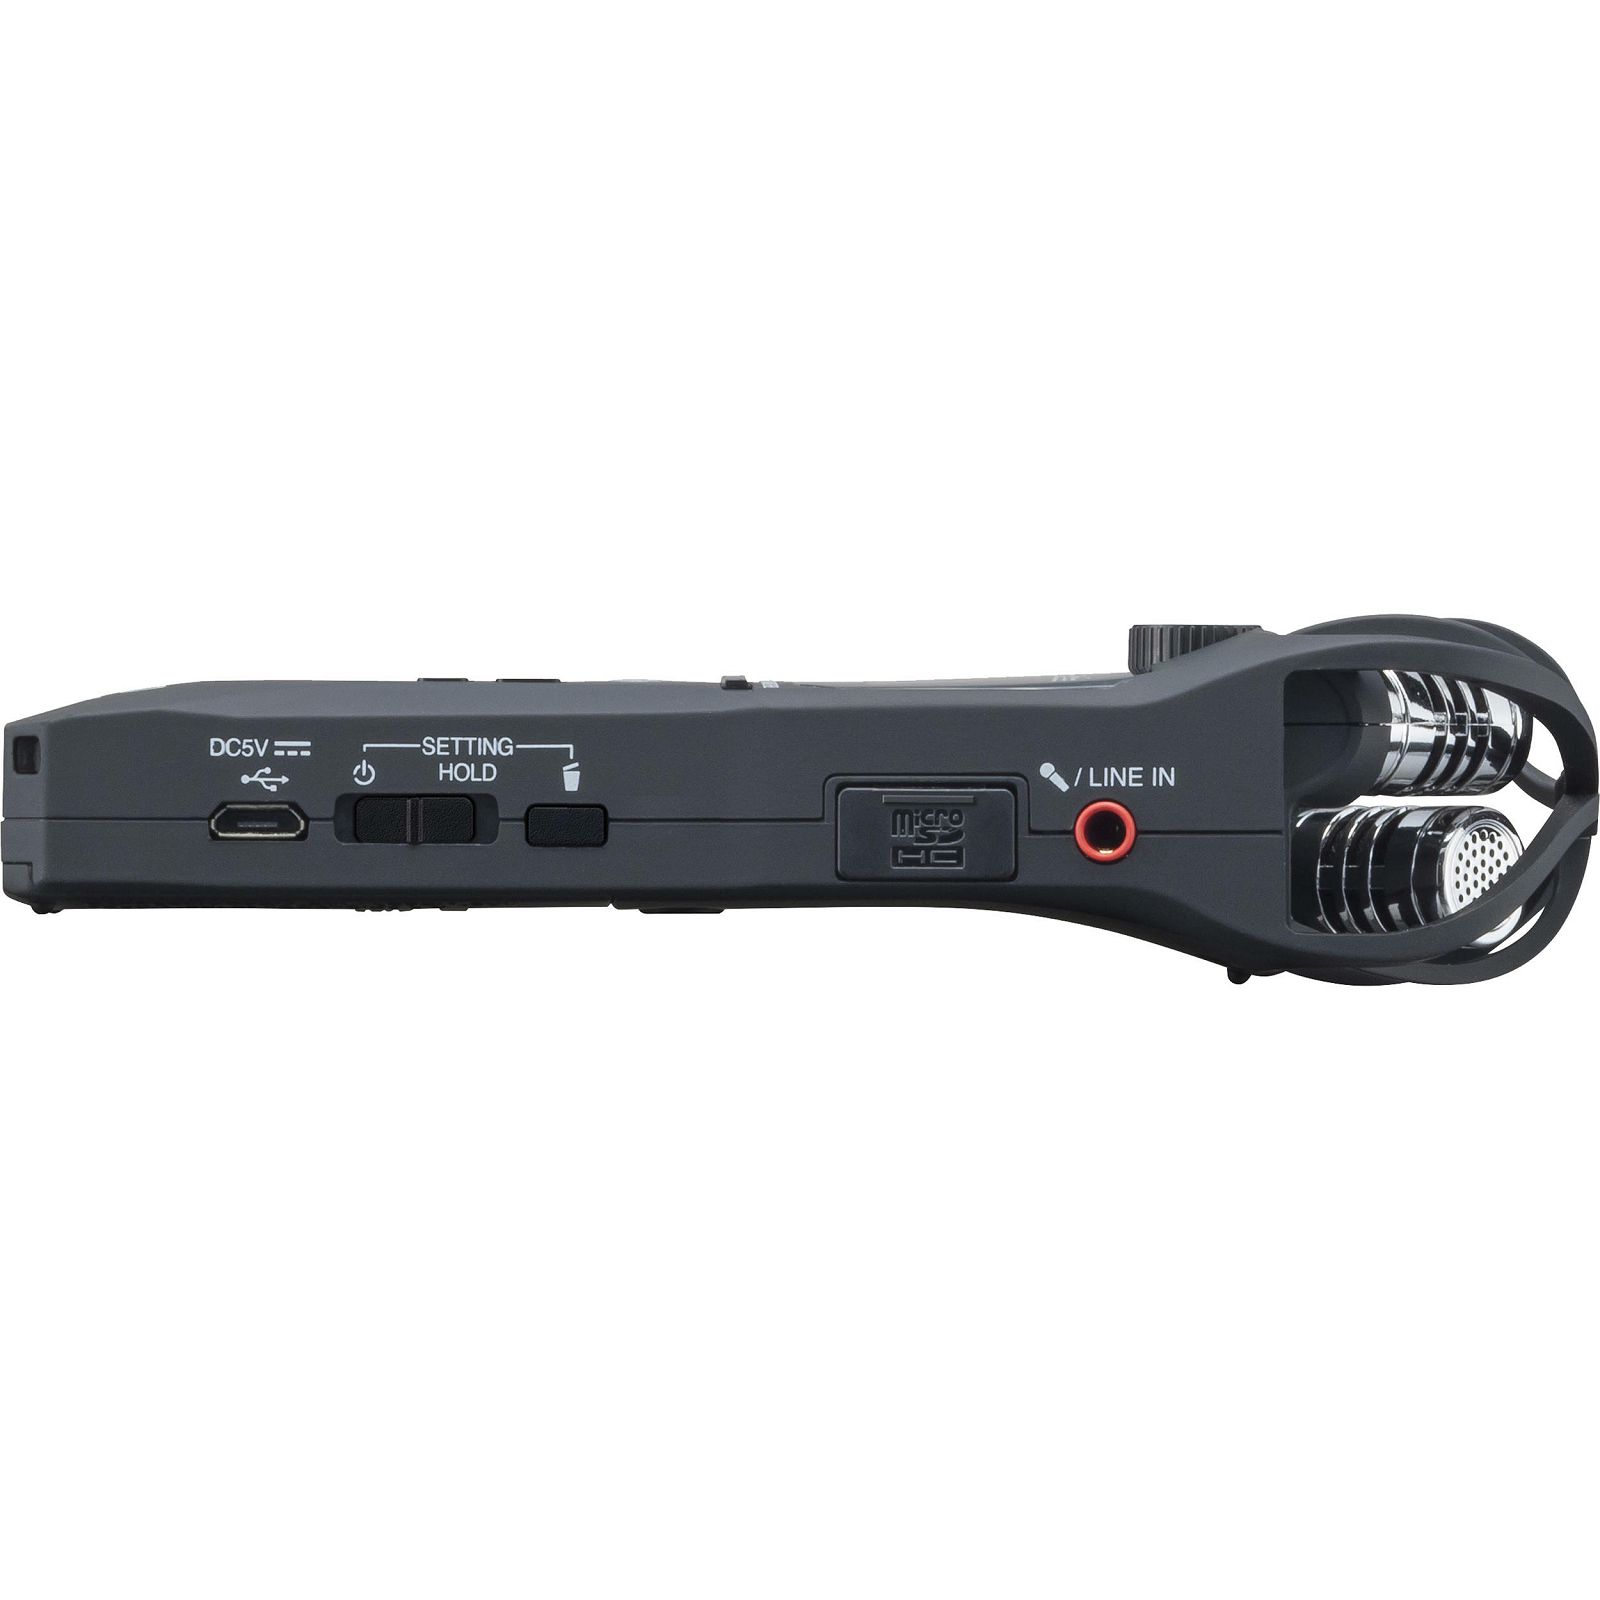 Zoom H1N Ultra-Portable Digital Audio Recorder Black prijenosni ručni snimač (314749)